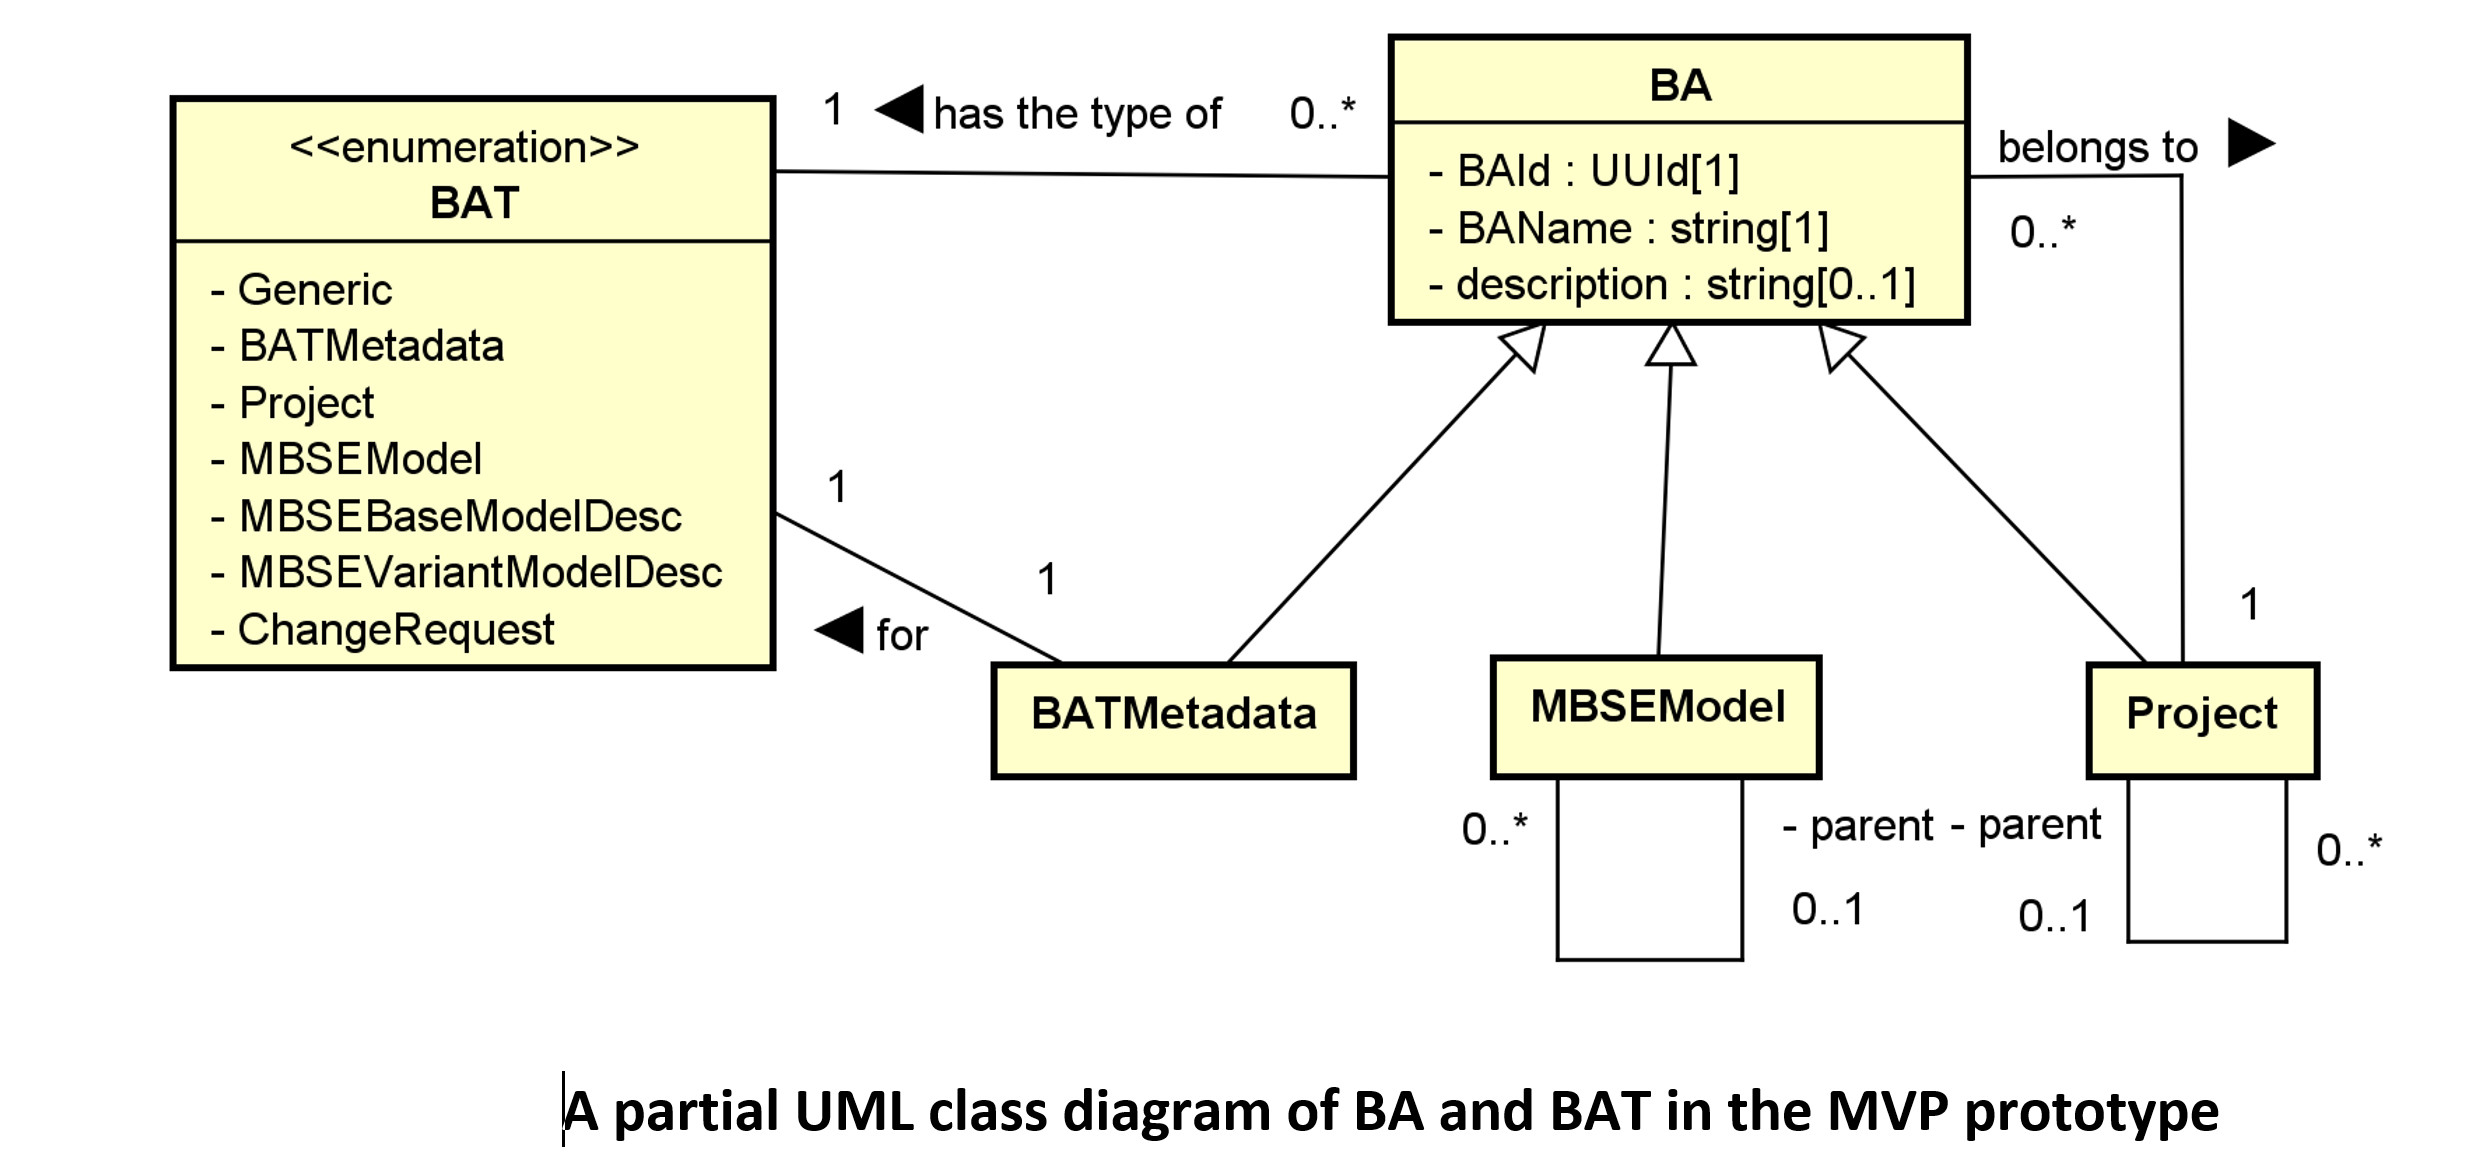 MBSE Model